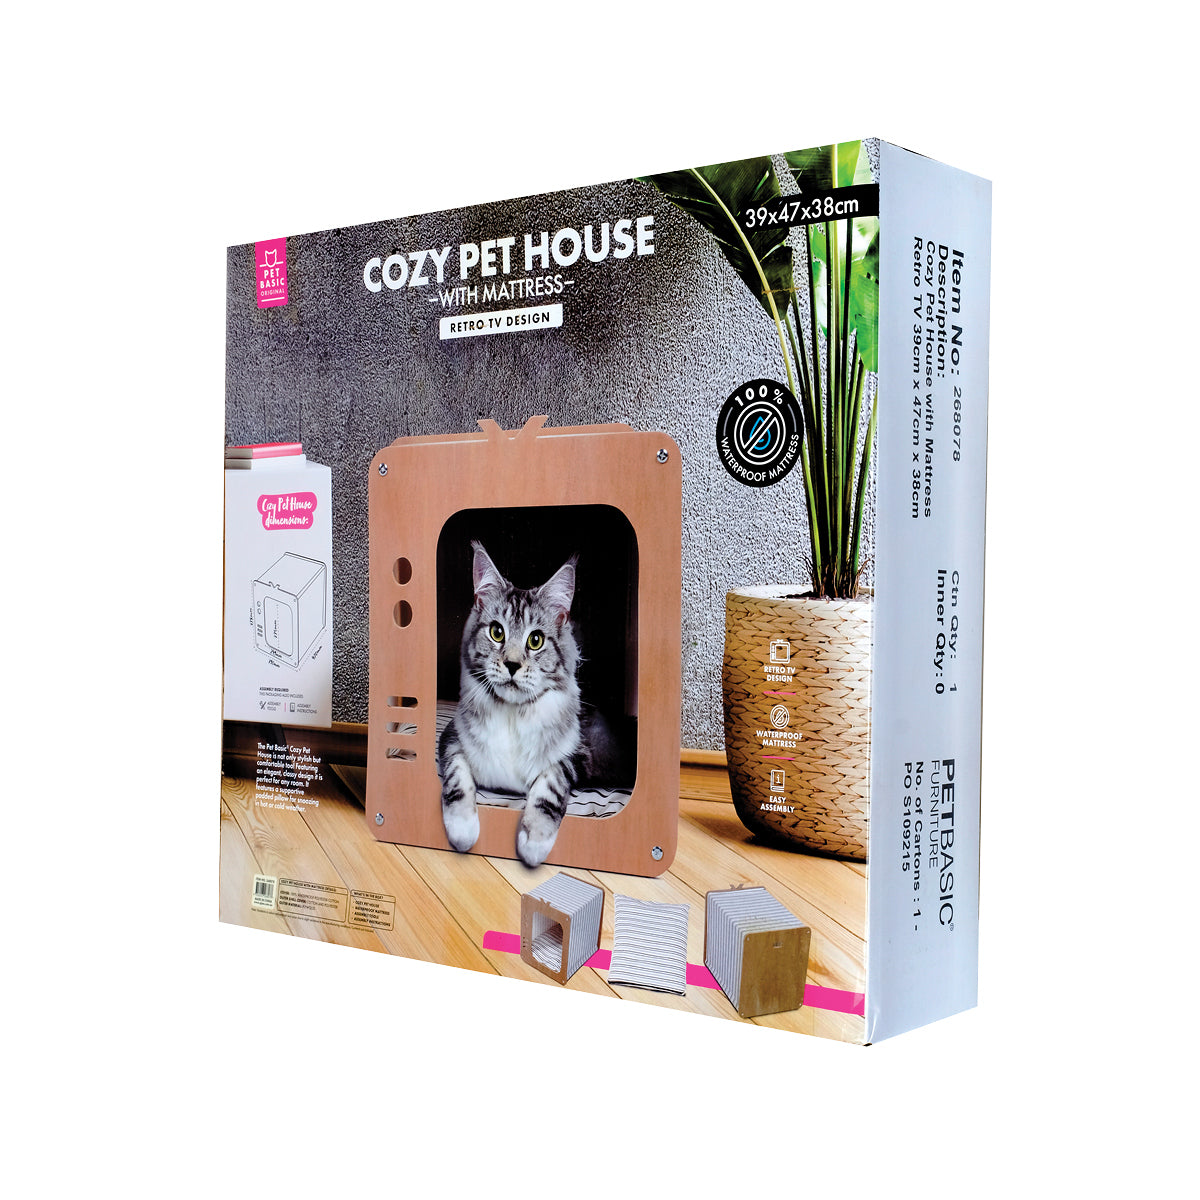 Pet Basic Retro TV Cozy Cat House Waterproof Mattress 39 x 47 x 38cm - SILBERSHELL